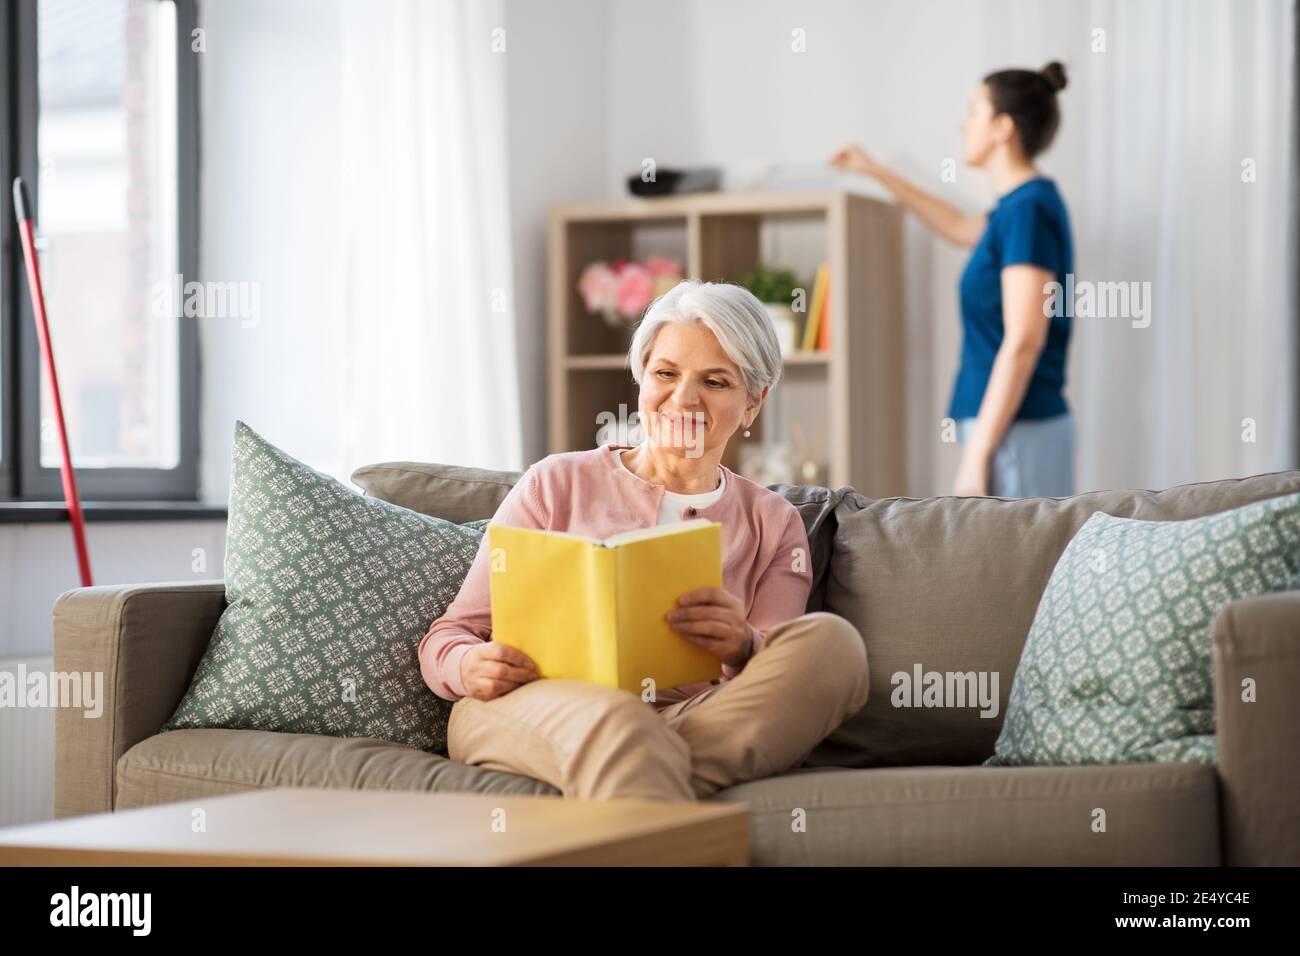 https://c8.alamy.com/comp/2E4YC4E/old-woman-reading-book-and-housekeeper-at-home-2E4YC4E.jpg